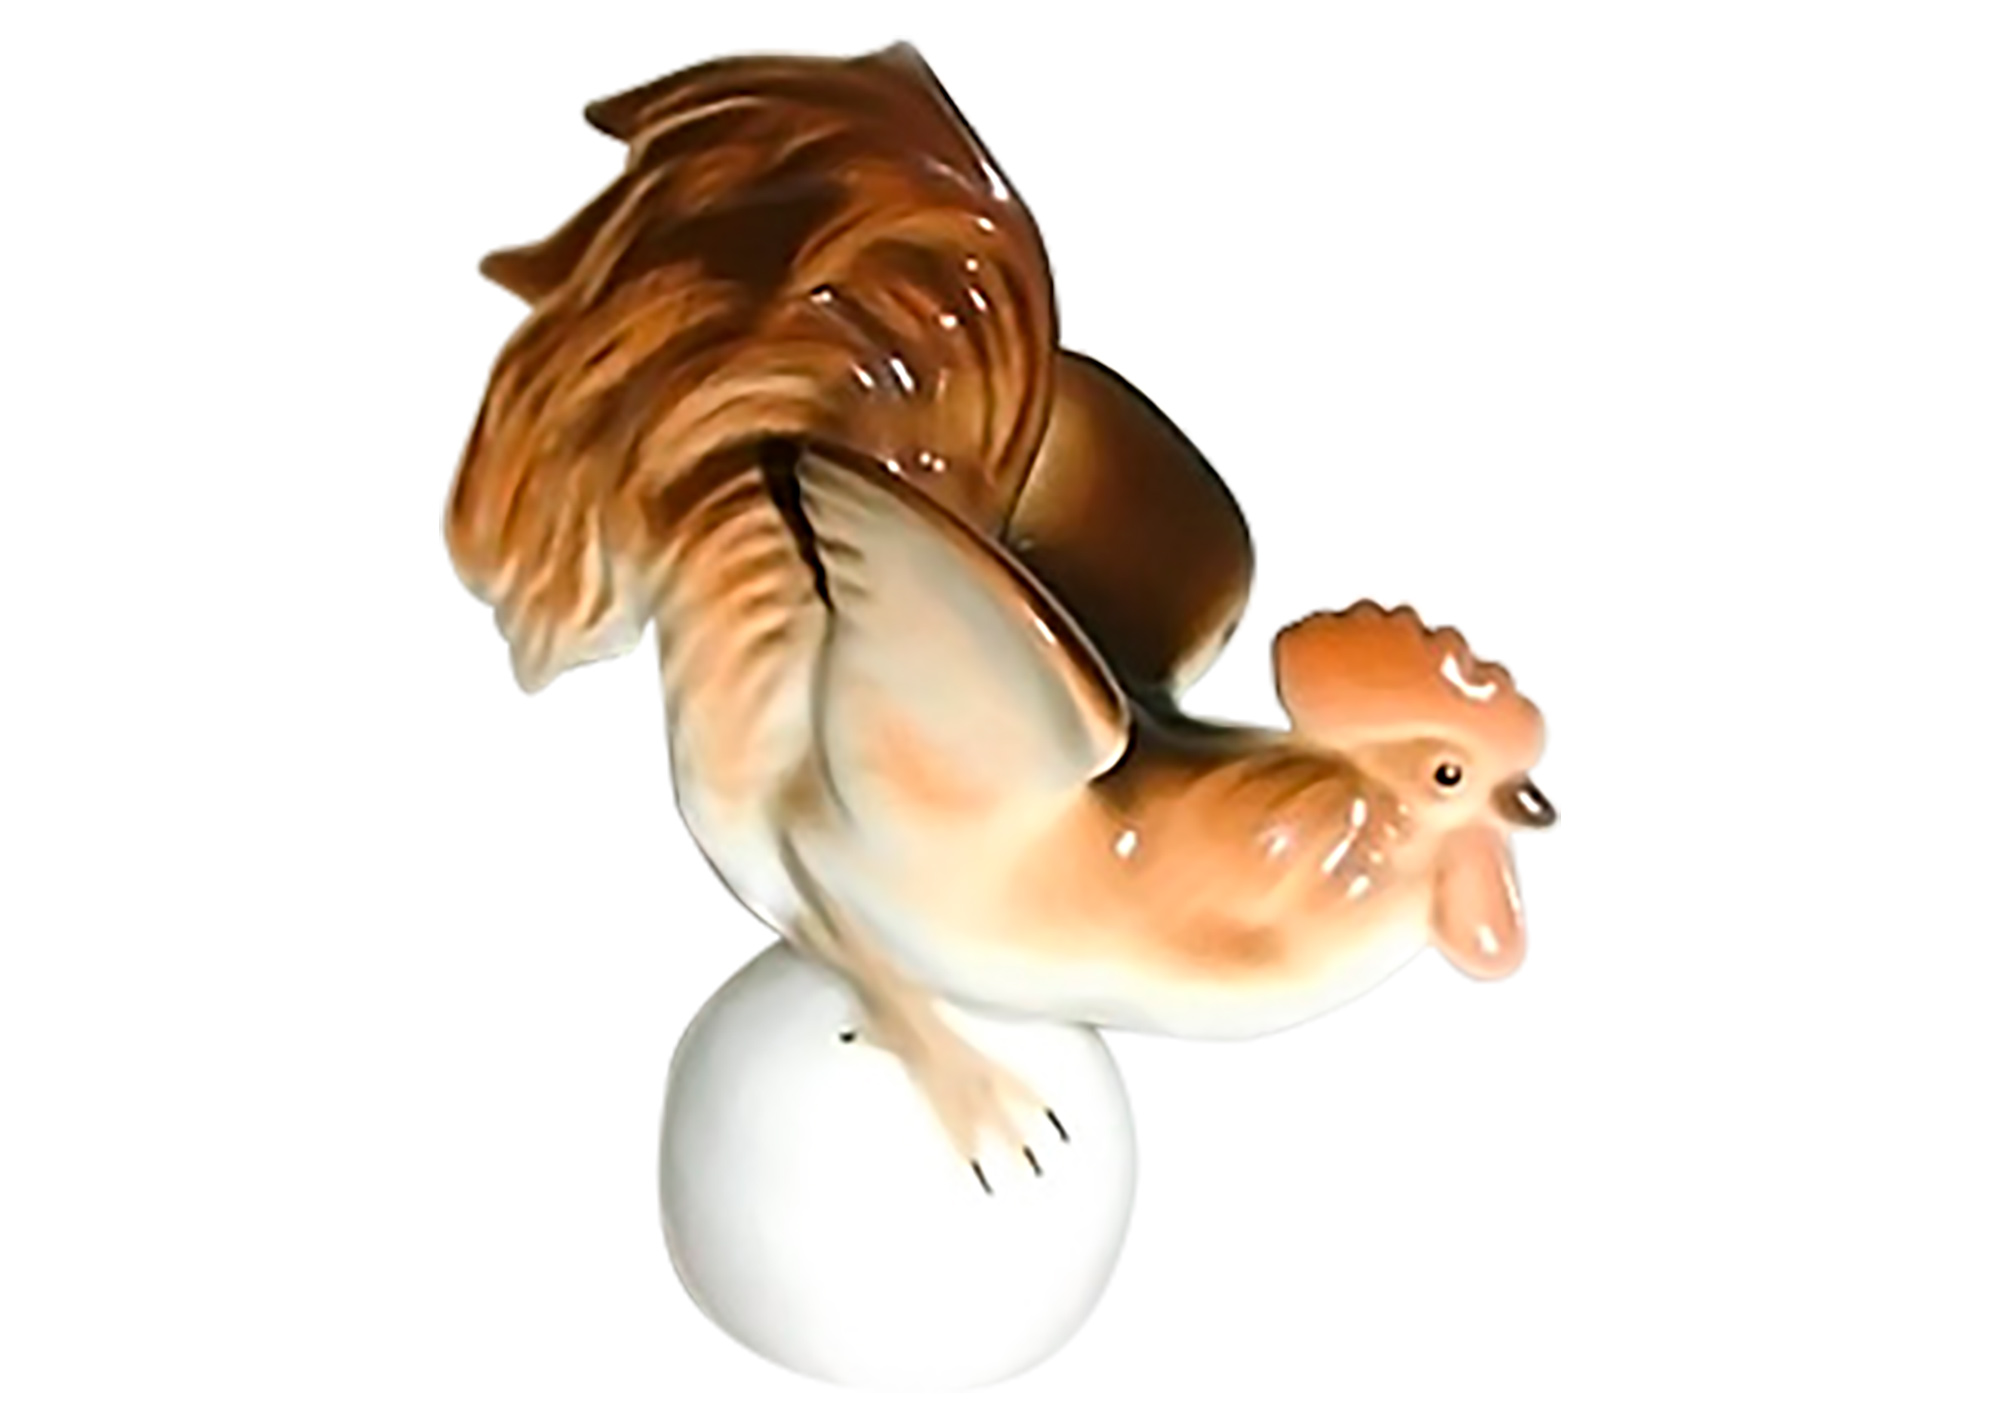 Buy Rooster on a Ball Porcelain Figurine at GoldenCockerel.com